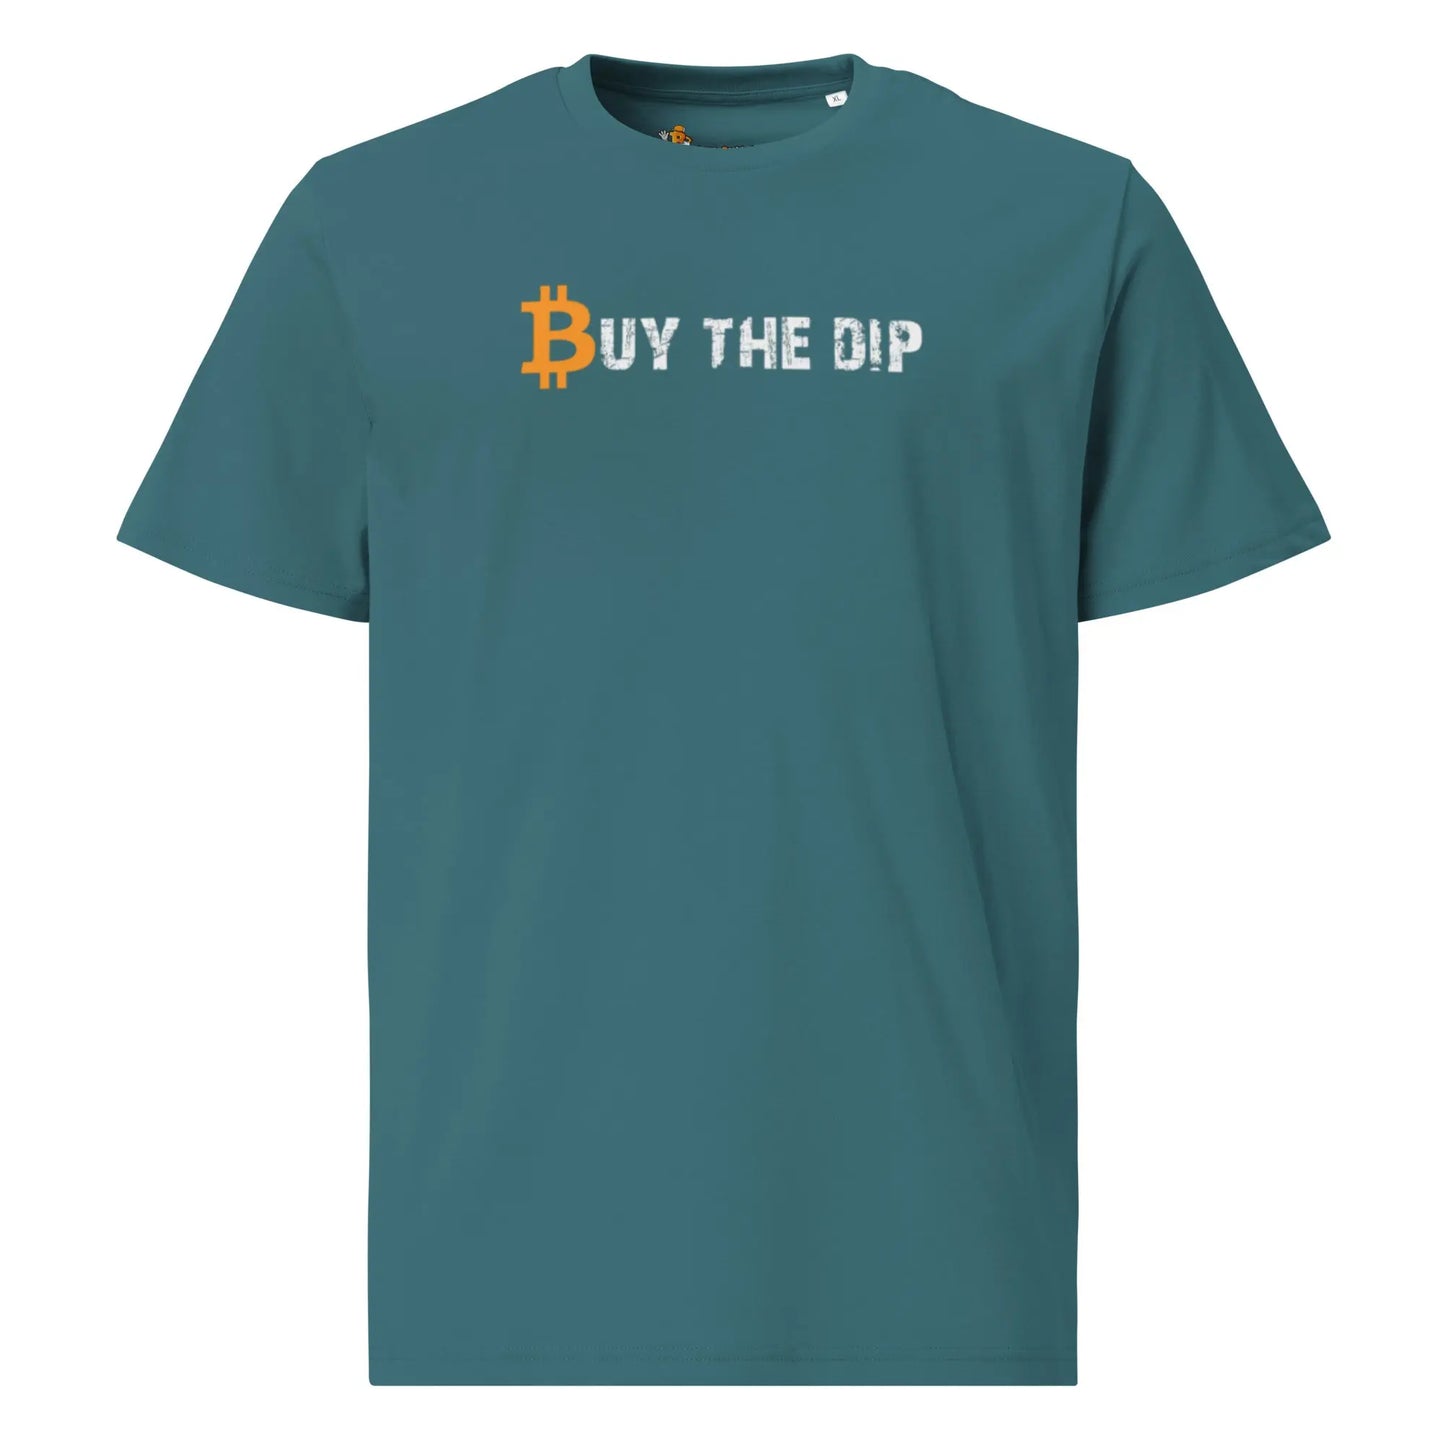 Buy The Dip - Premium Unisex Organic Cotton Bitcoin T-shirt Stargazer Color